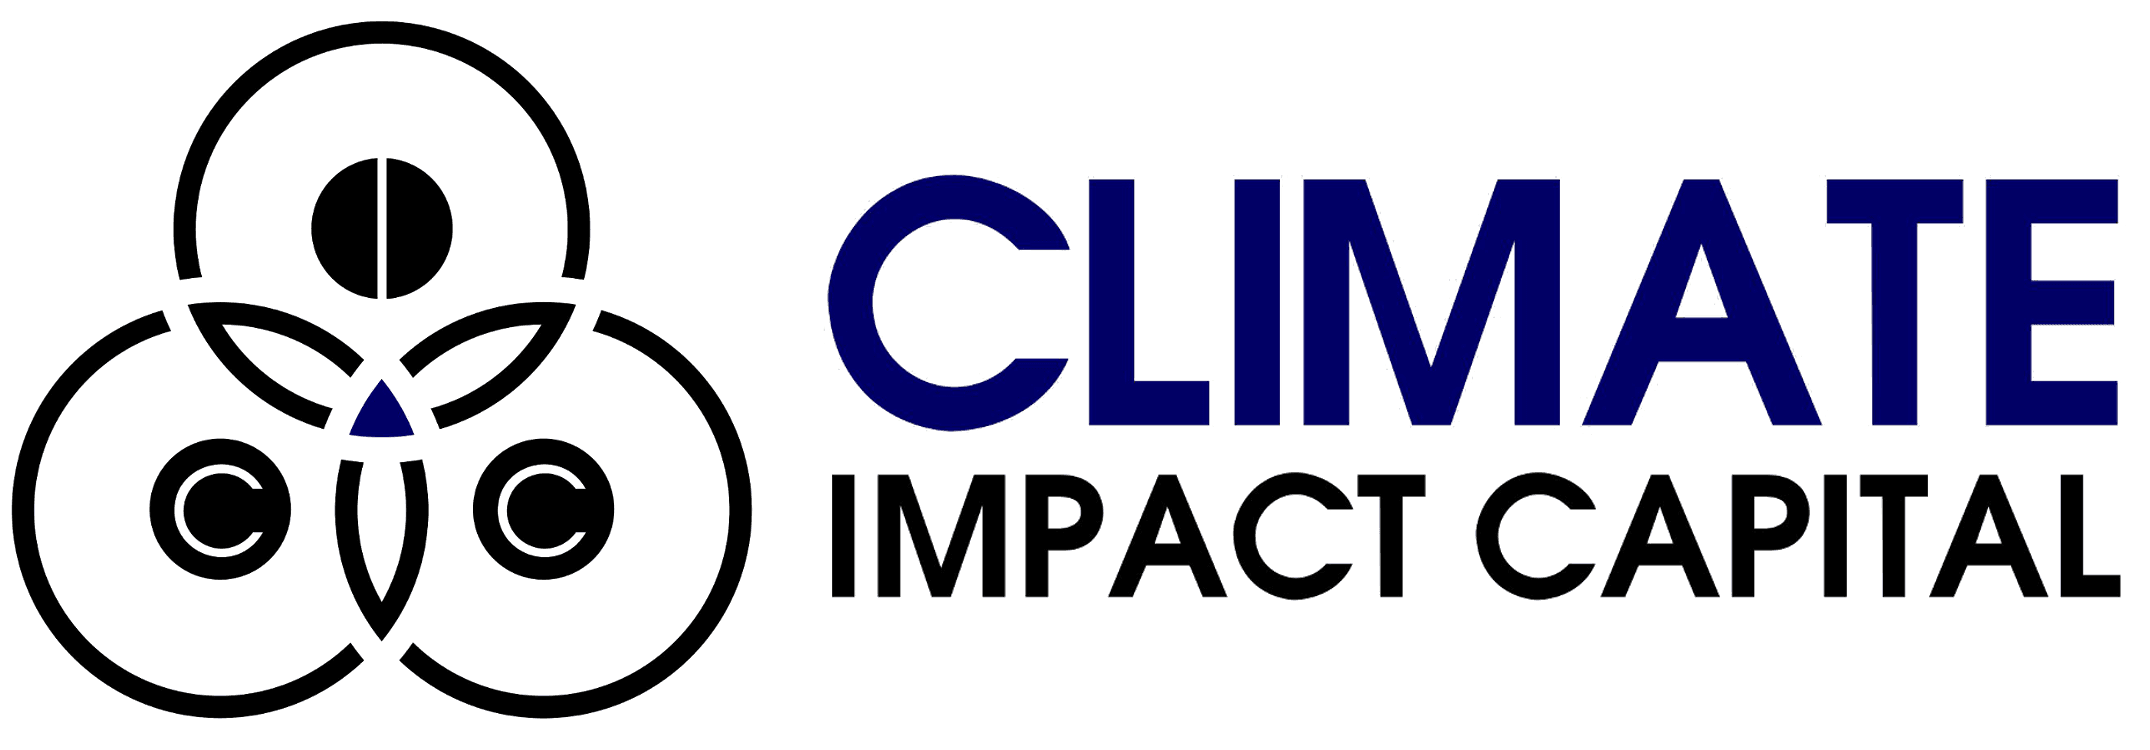 Climate Impact Capital